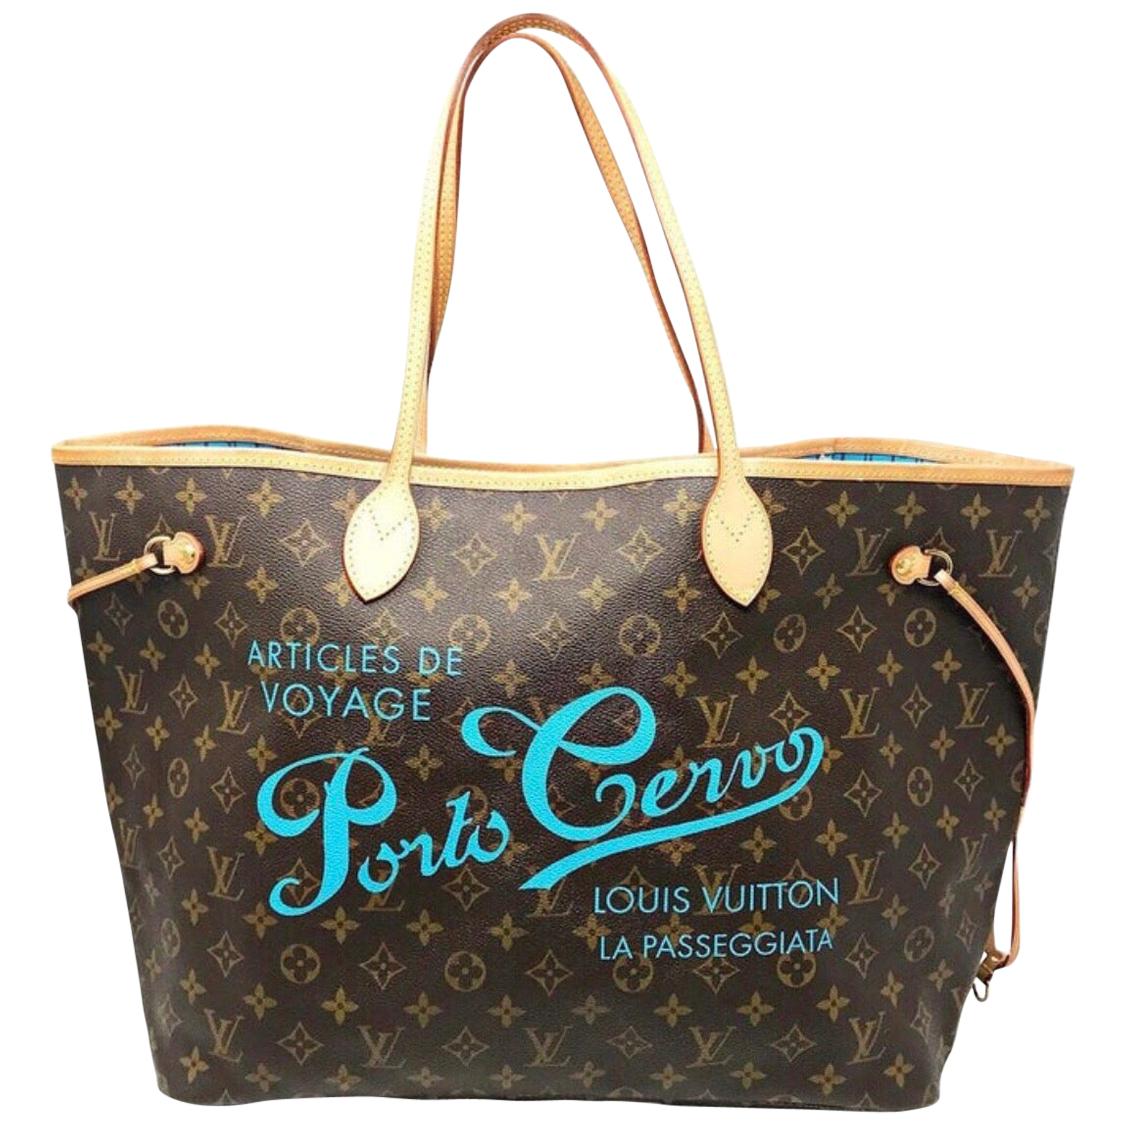 Neverfull limited Edition Bag PORTO CERVO Louis Vuitton